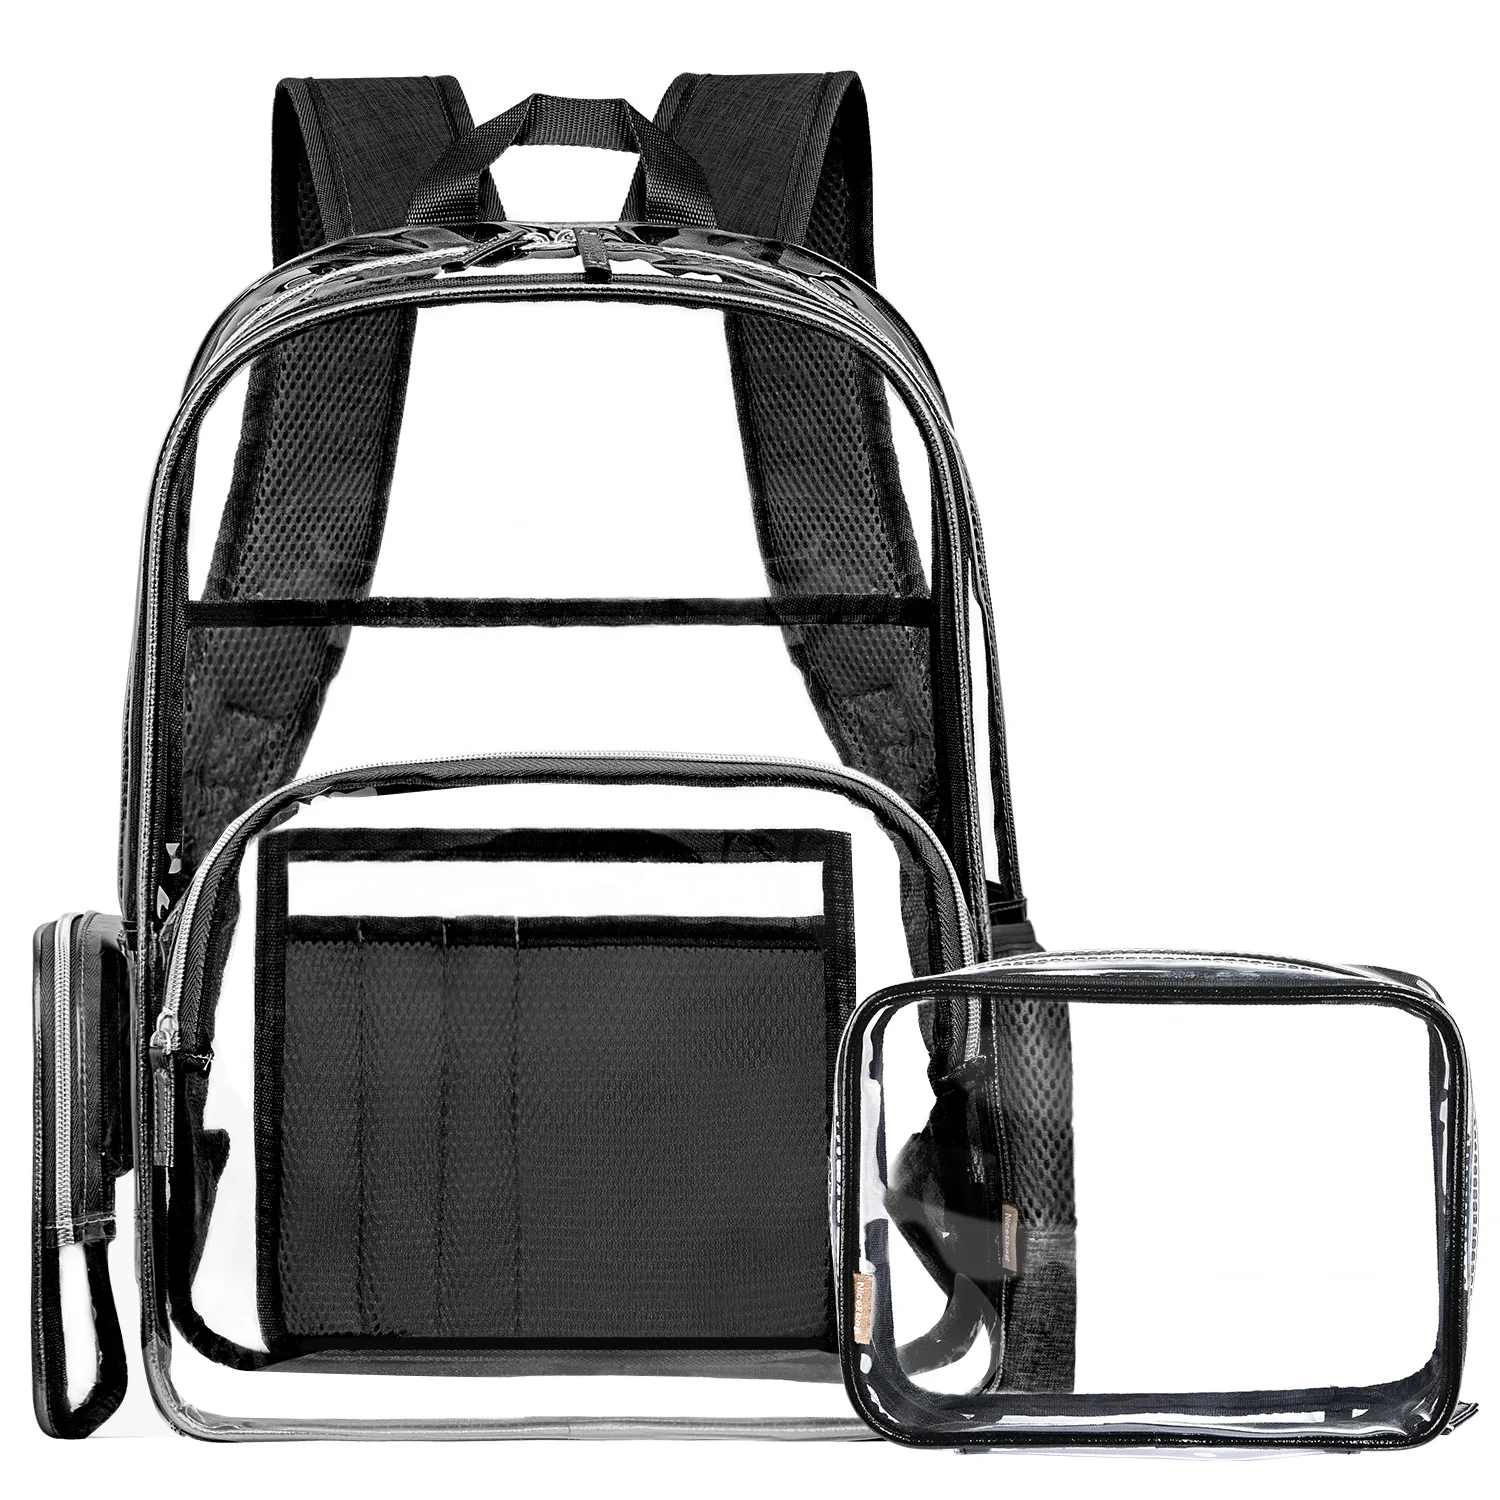 Classic Black Transparent Backpack Fashion Backpack Travel Travel Bag Student School Bag